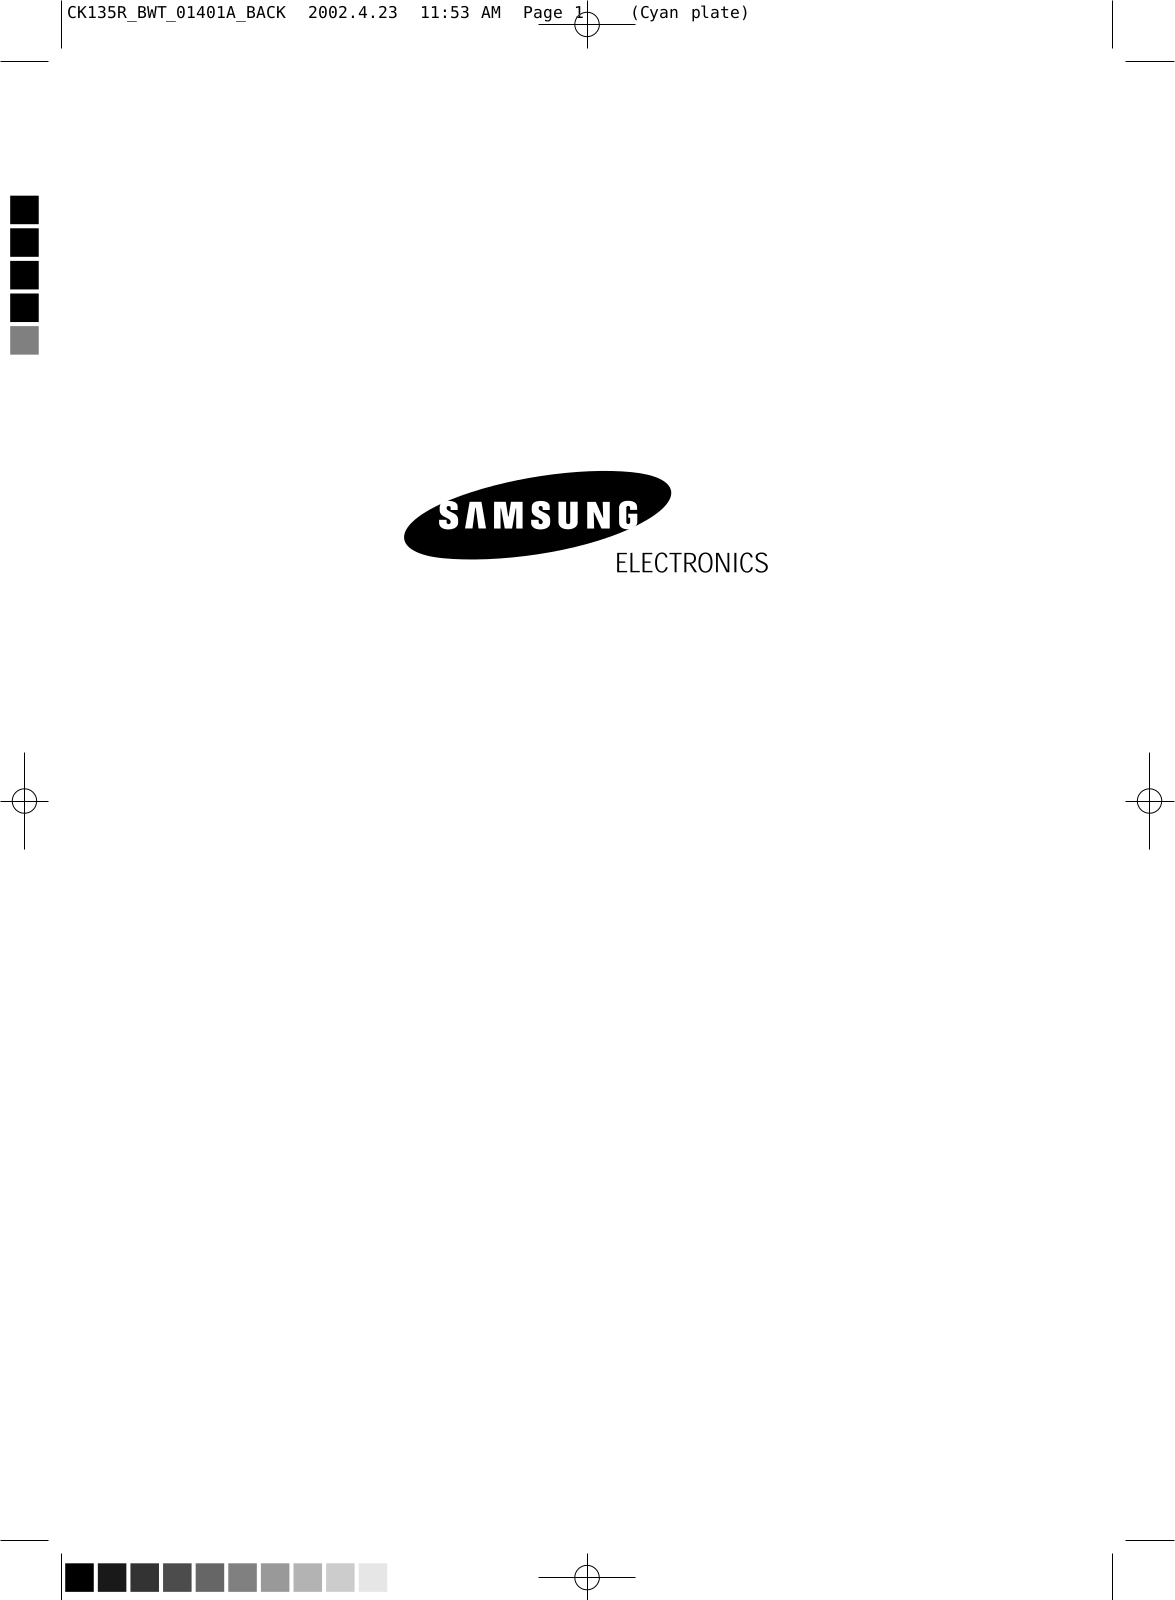 Samsung CK139FSR User Manual